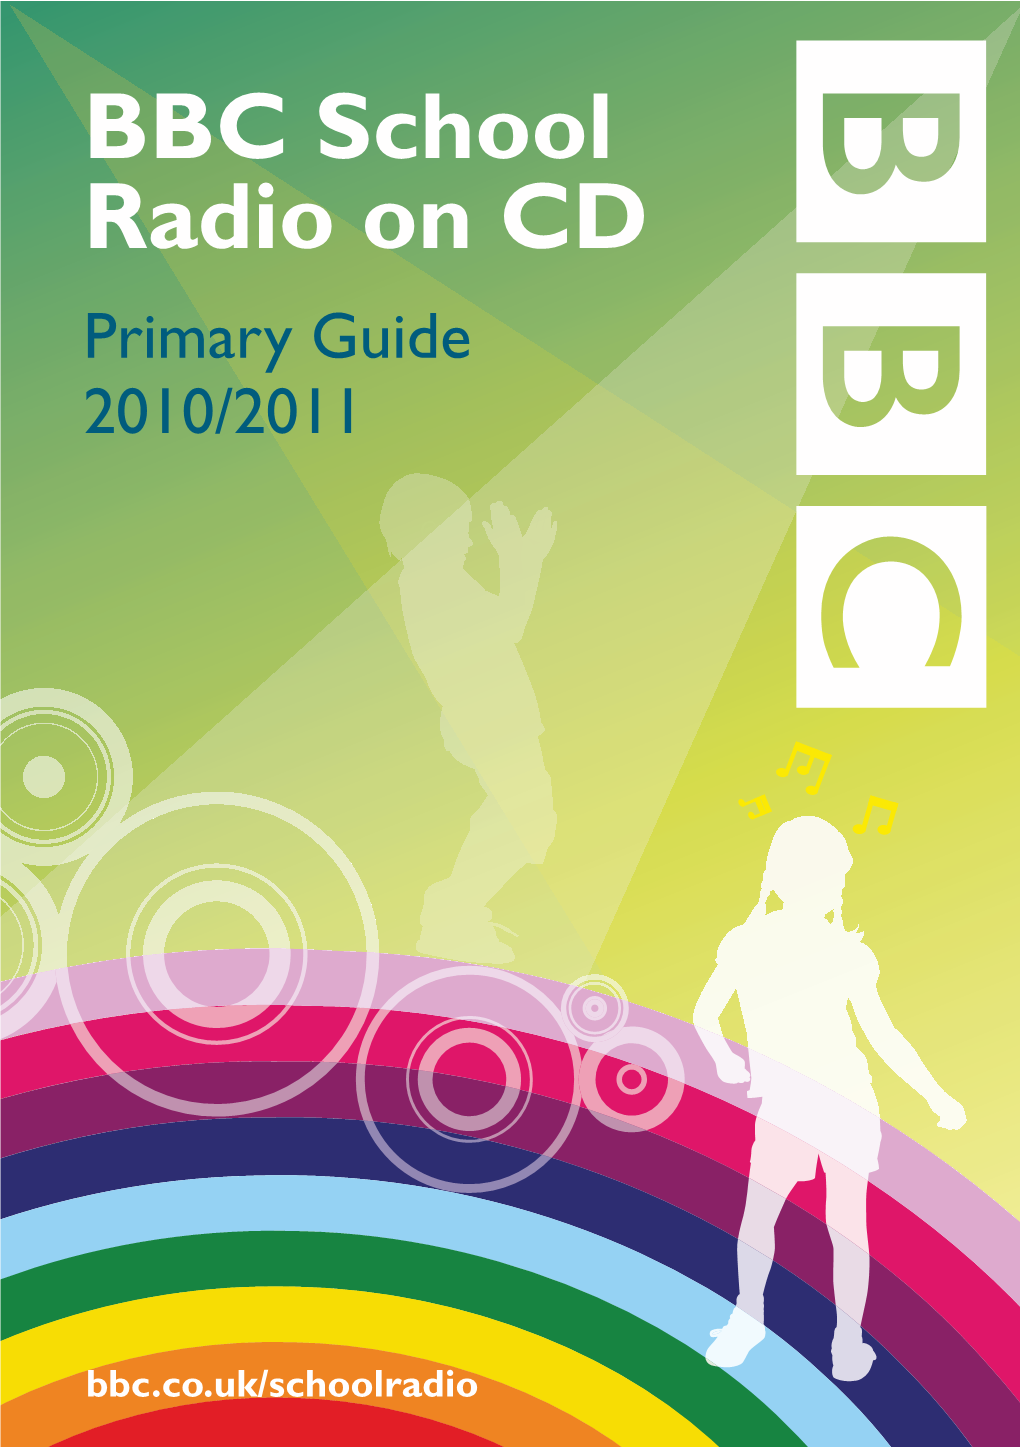 BBC School Radio on CD Primary Guide 2010/2011